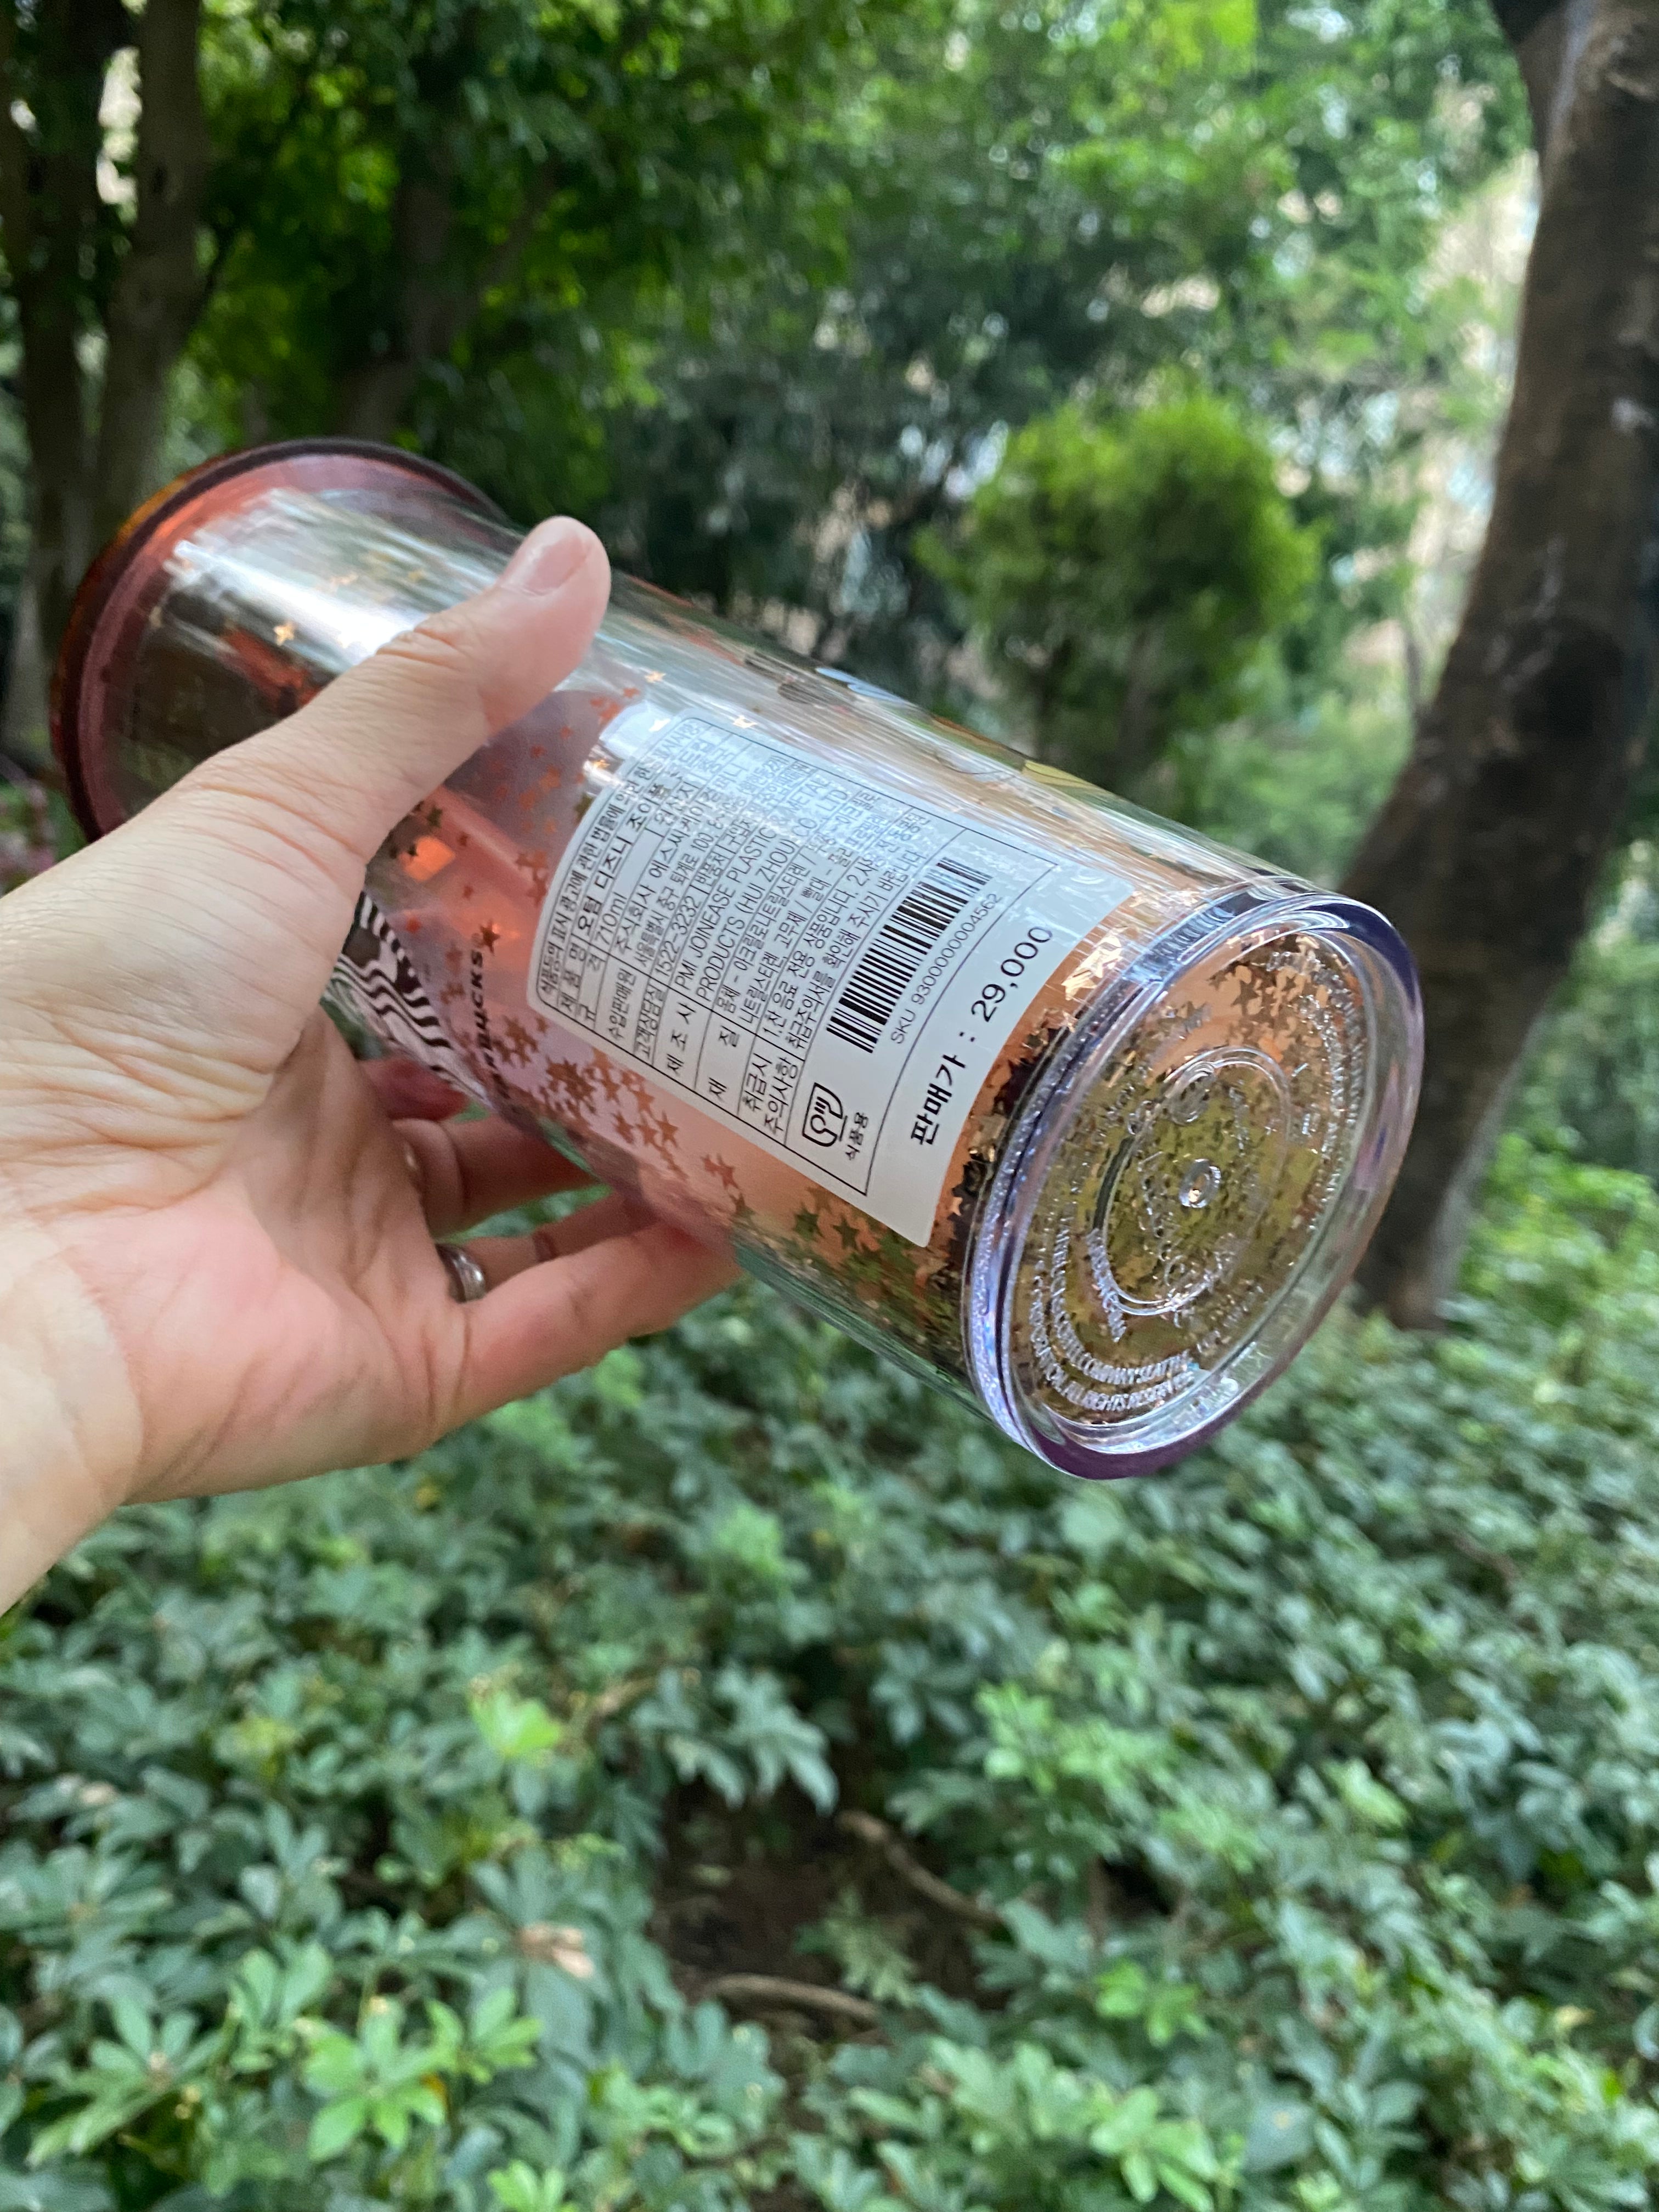 PRE ORDER Starbucks Korea X Disney Tumbler 24oz Straw Plastic Cup